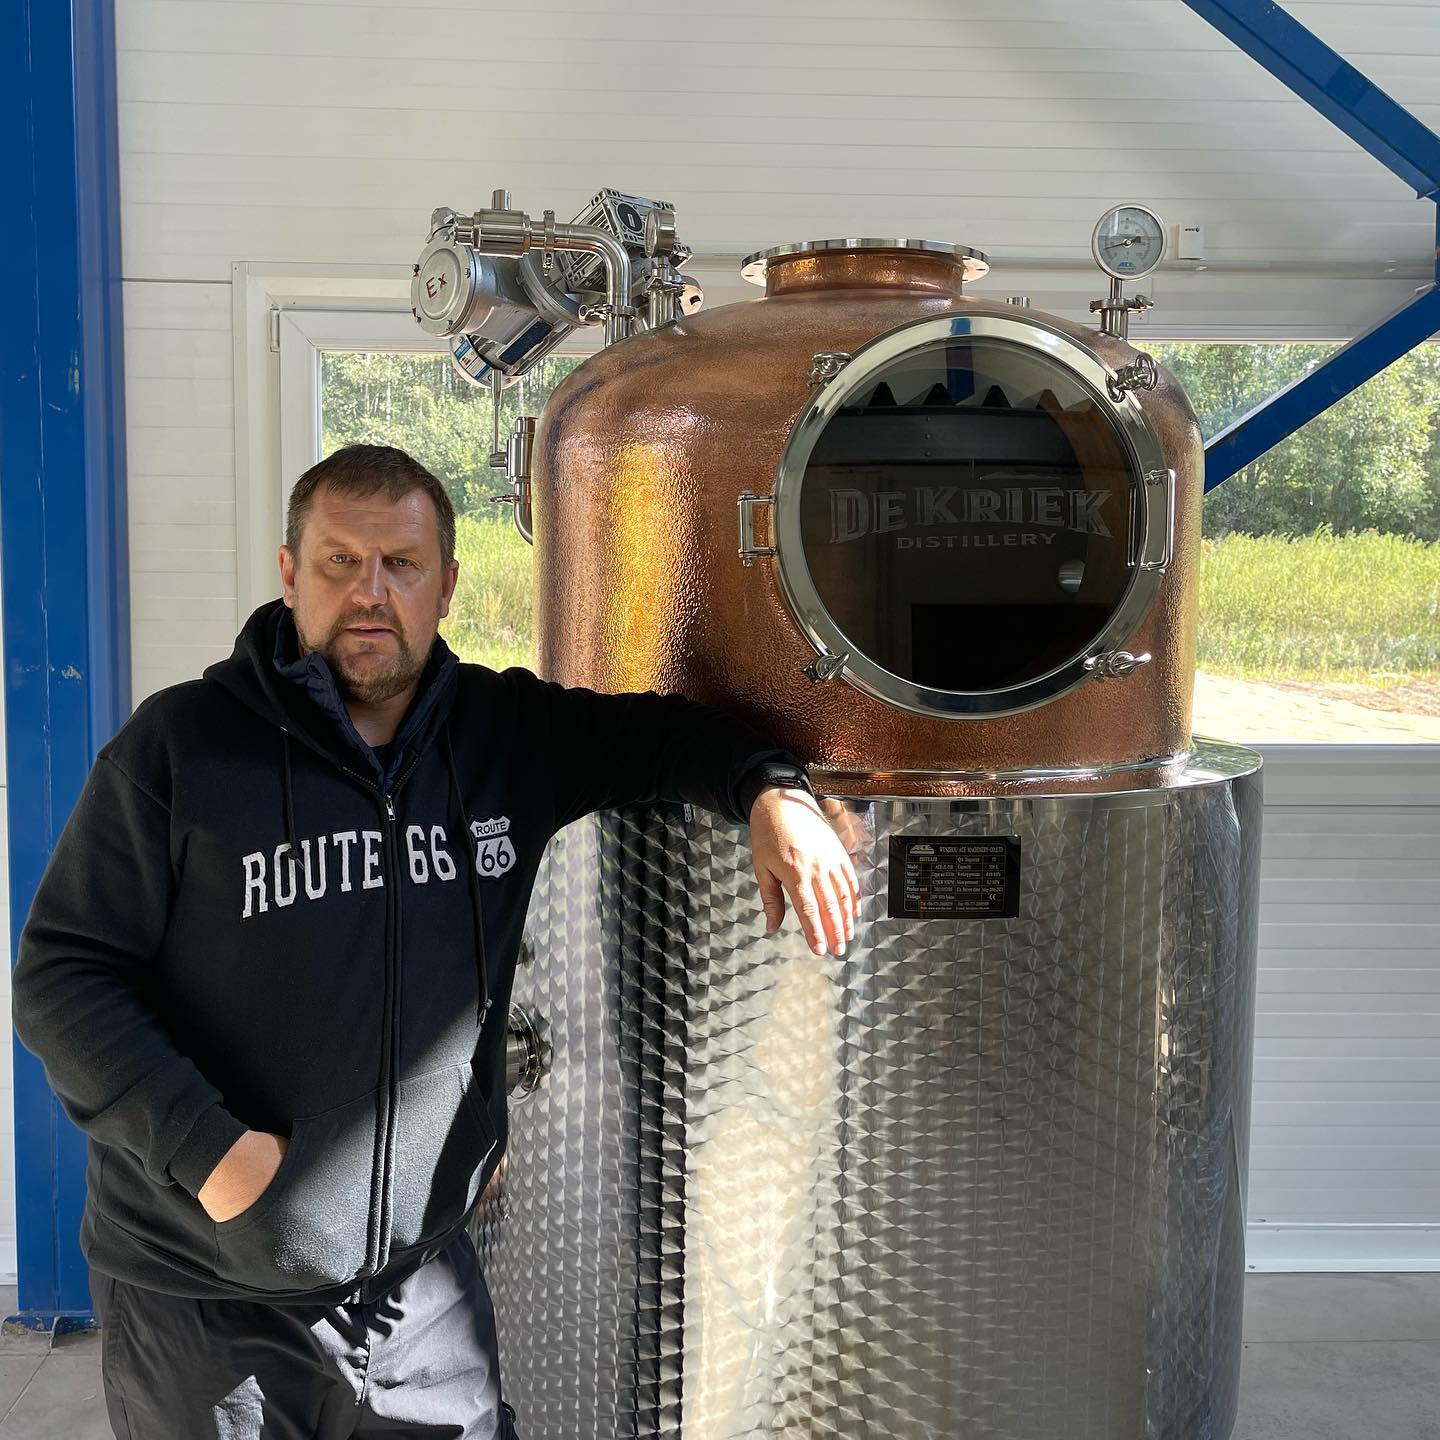 De Kriek distillery